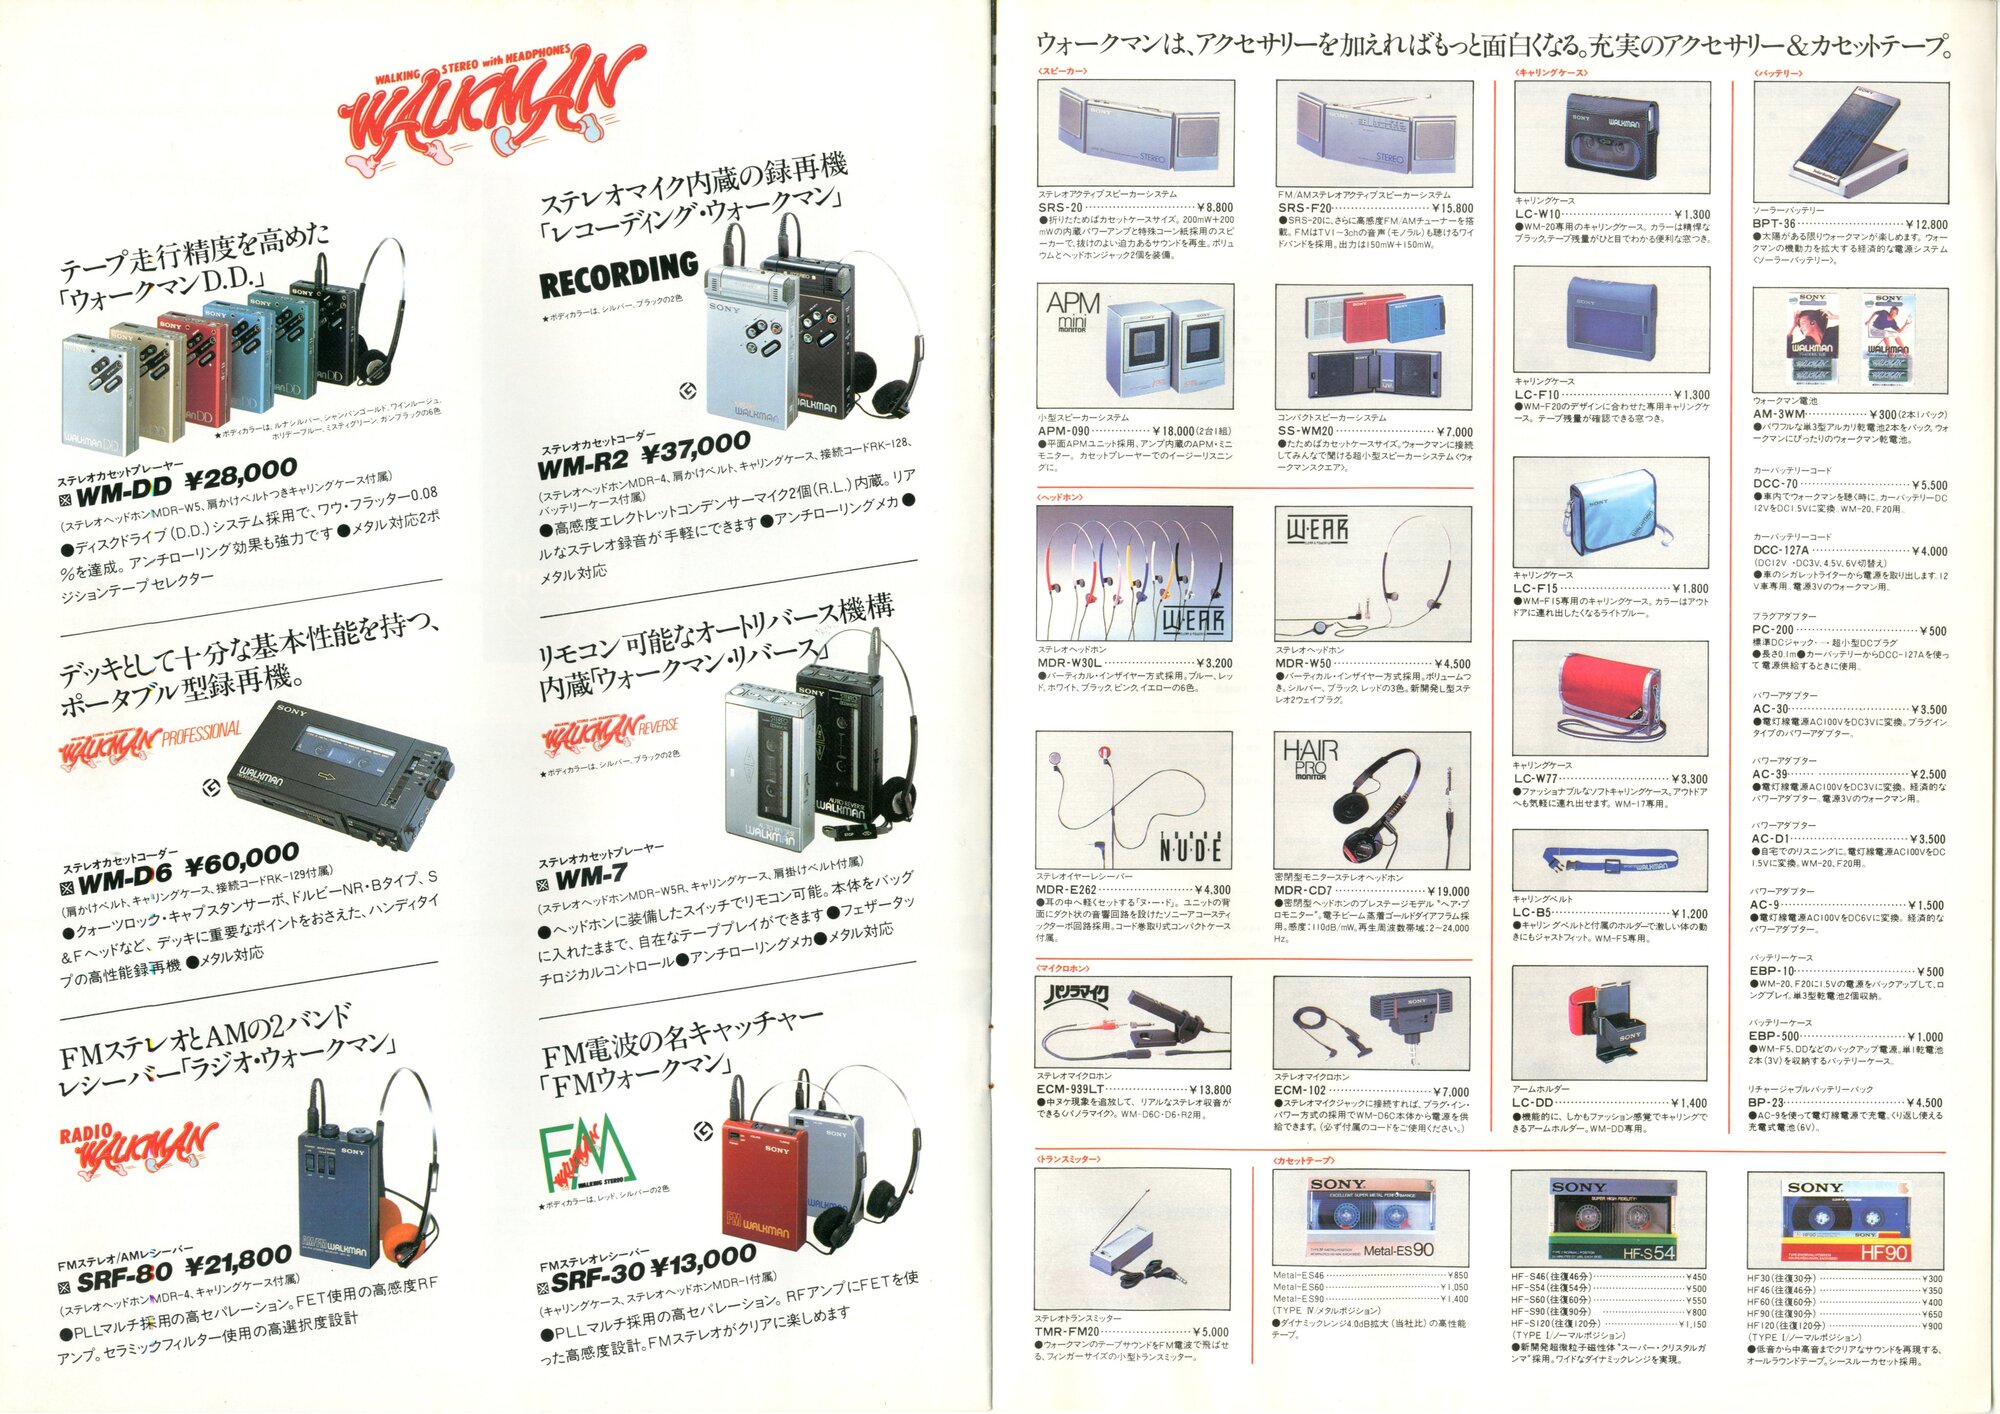 1984-2 Walkman 6.jpg